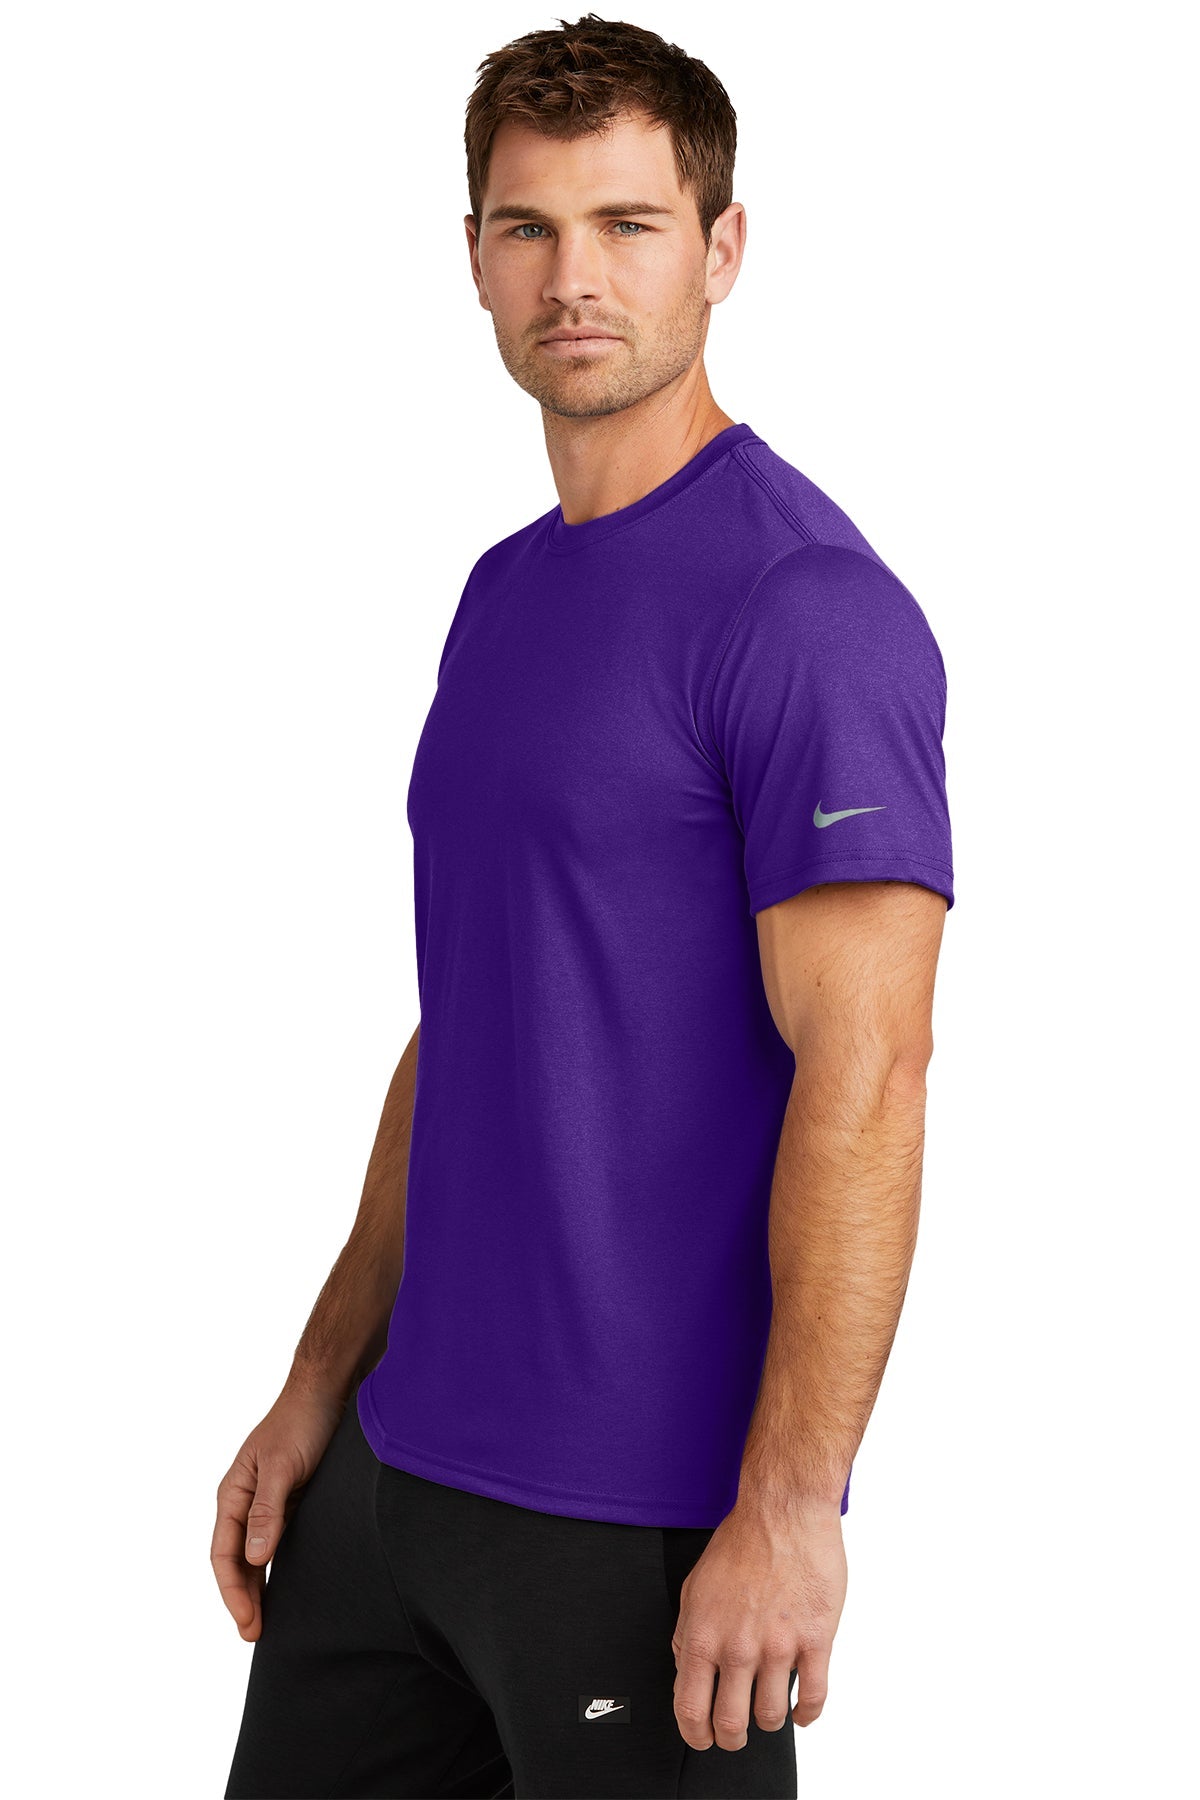 Nike Swoosh Sleeve rLegend Customized Tee's, Court Purple